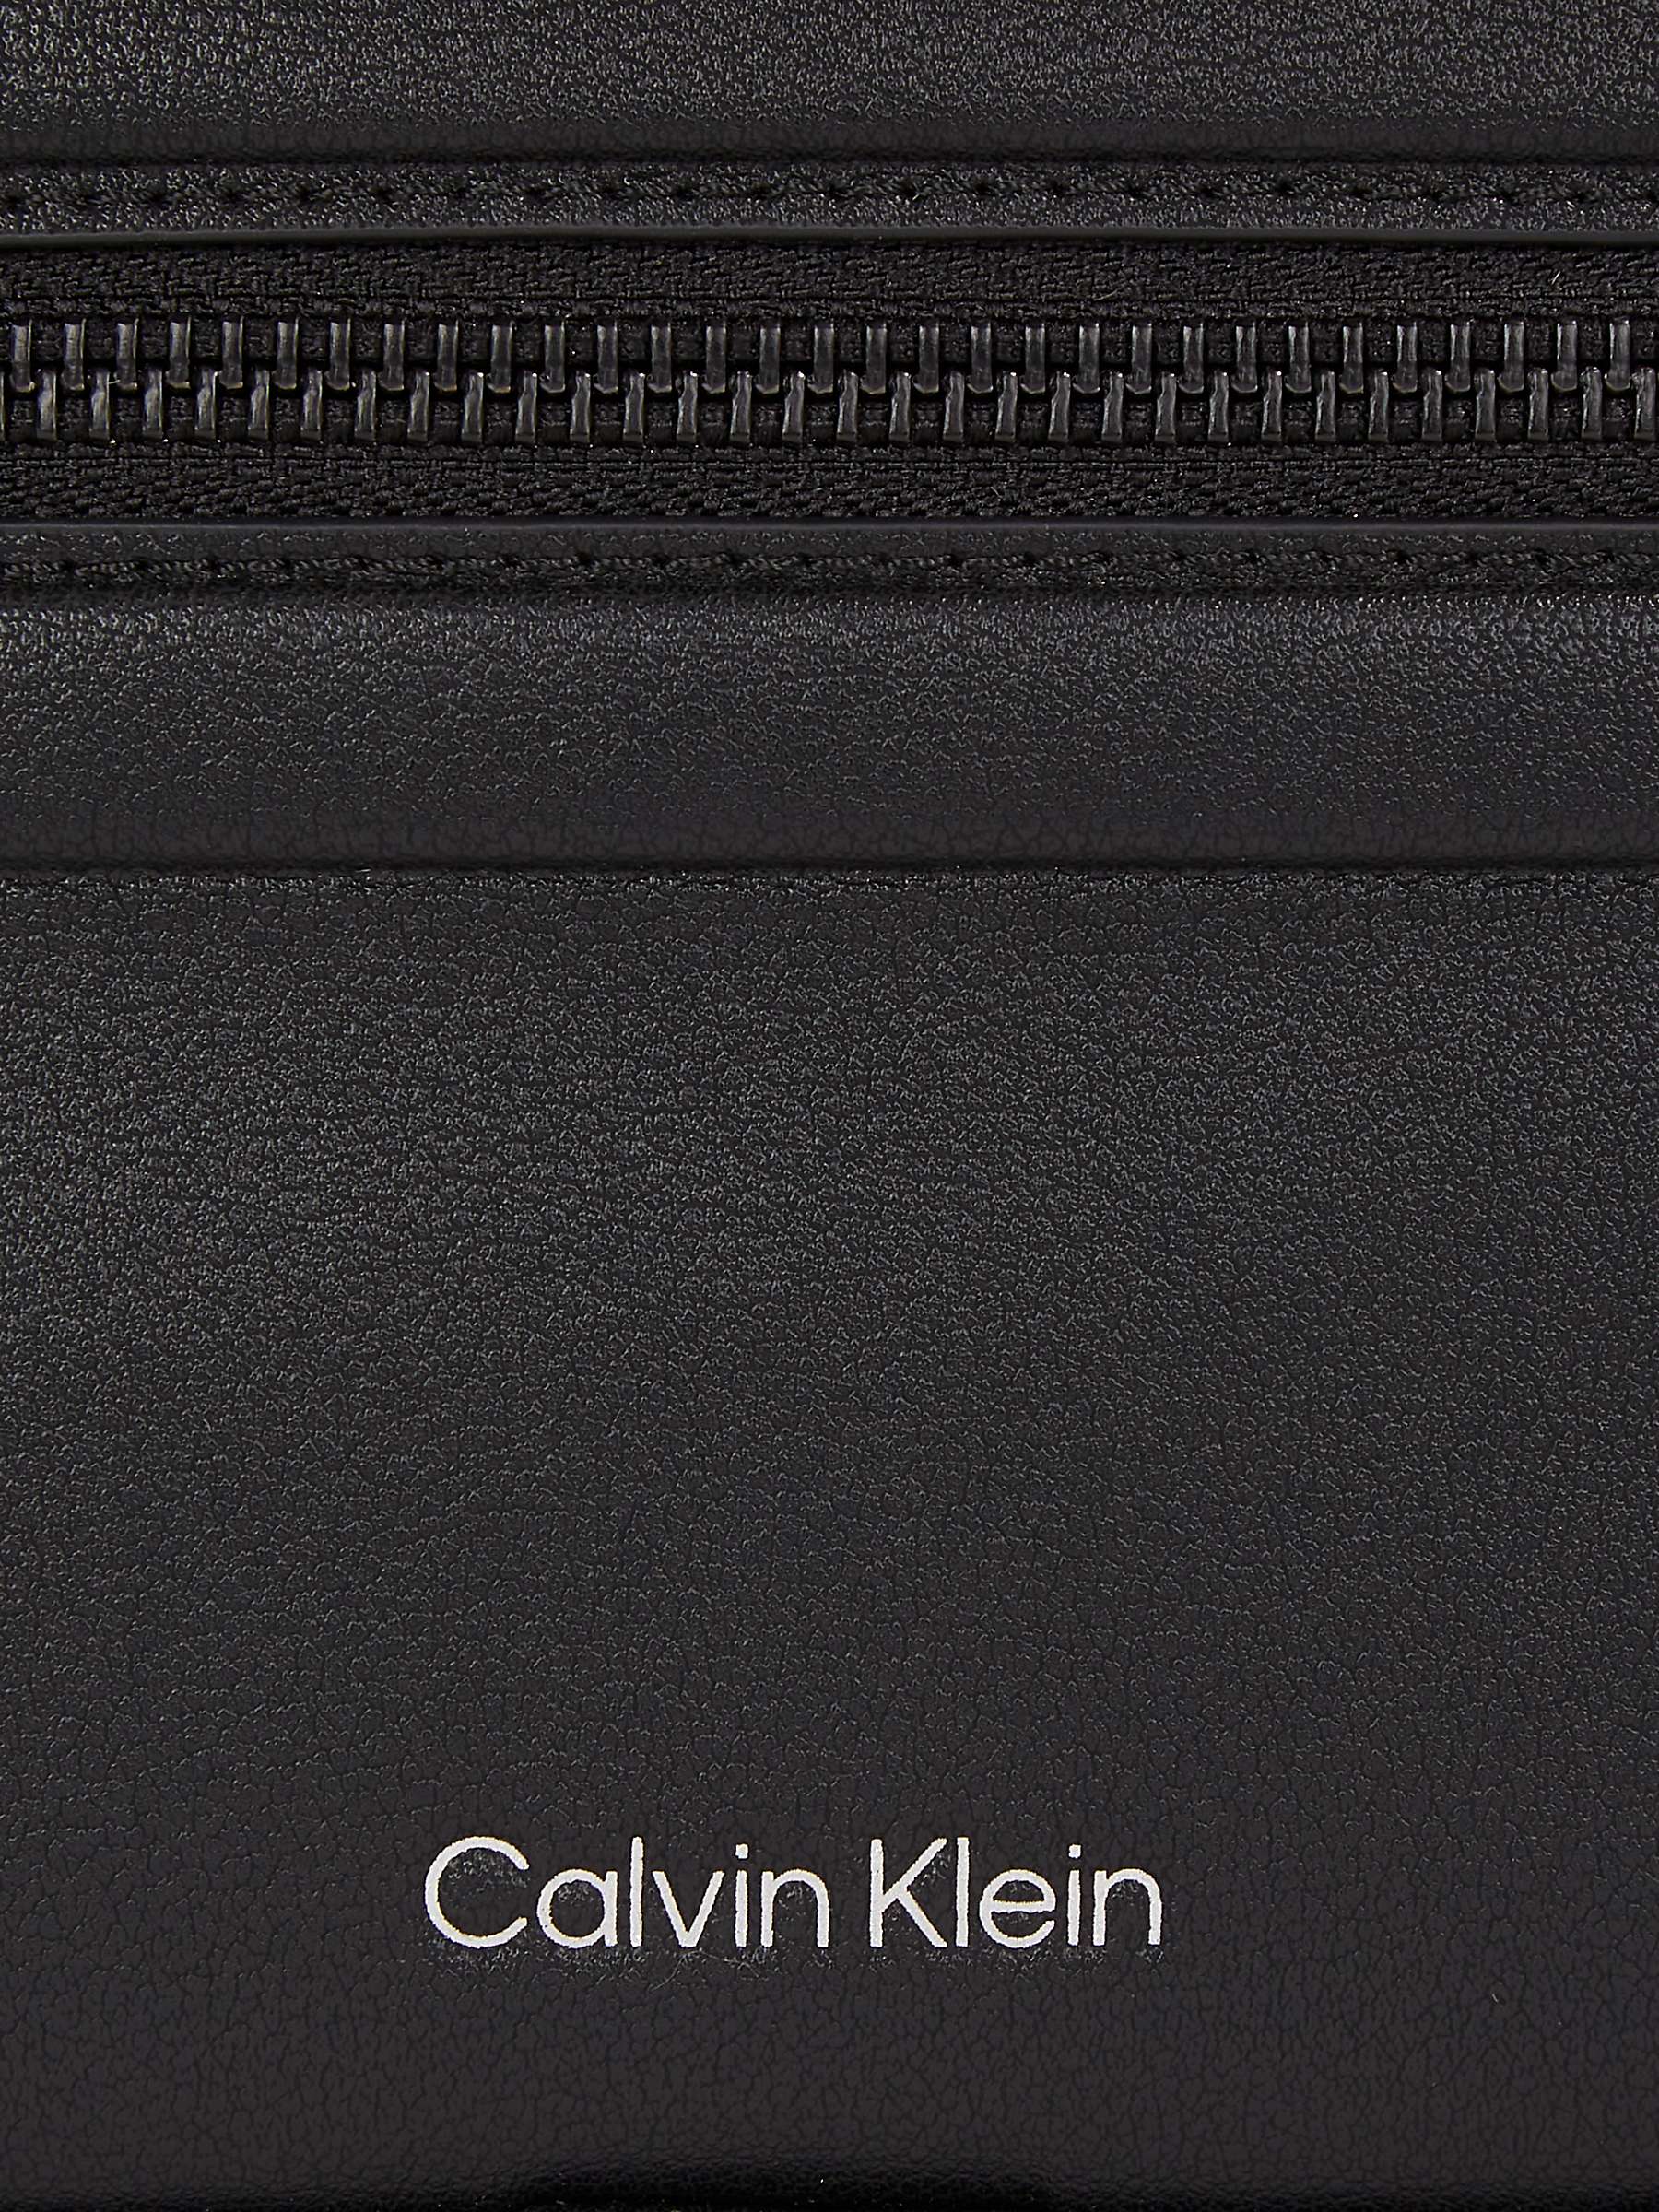 Buy Calvin Klein Elevated Camera Bag, Black Online at johnlewis.com